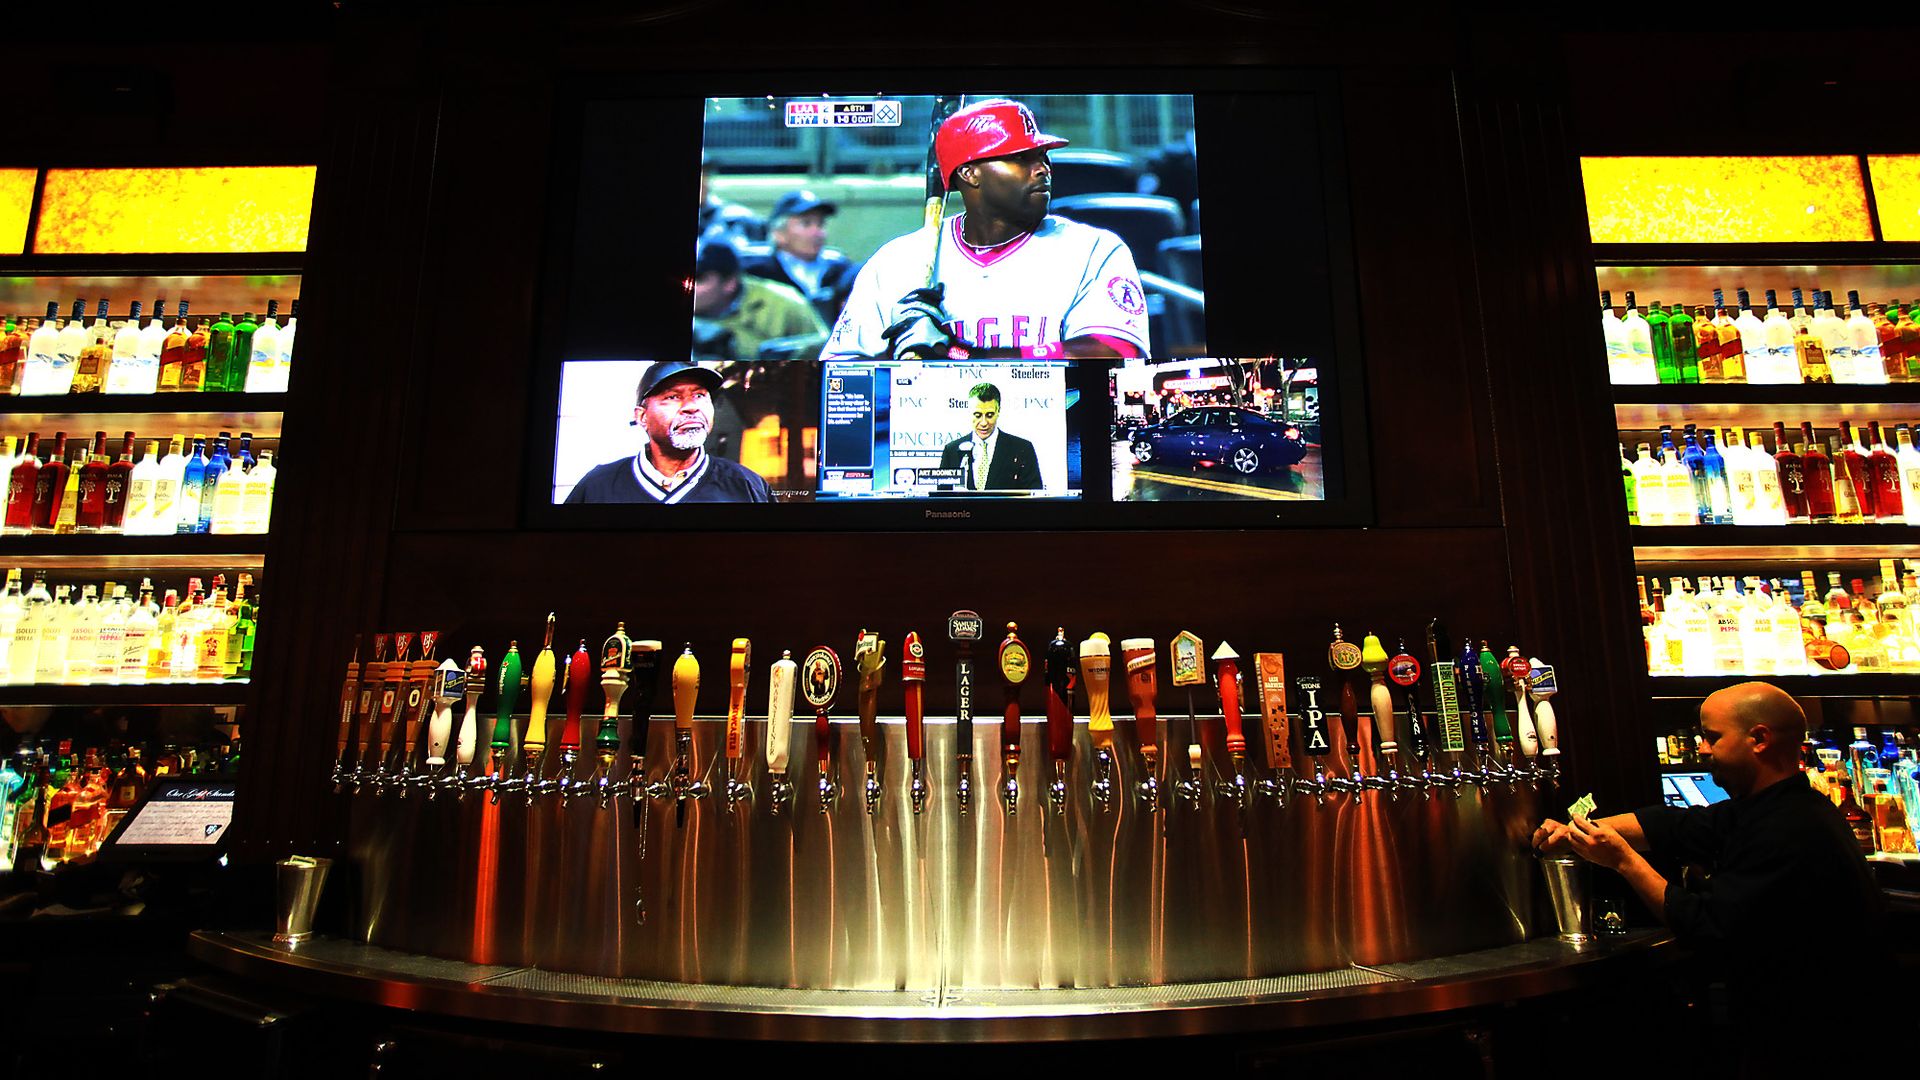 Beer taps at a sports bar